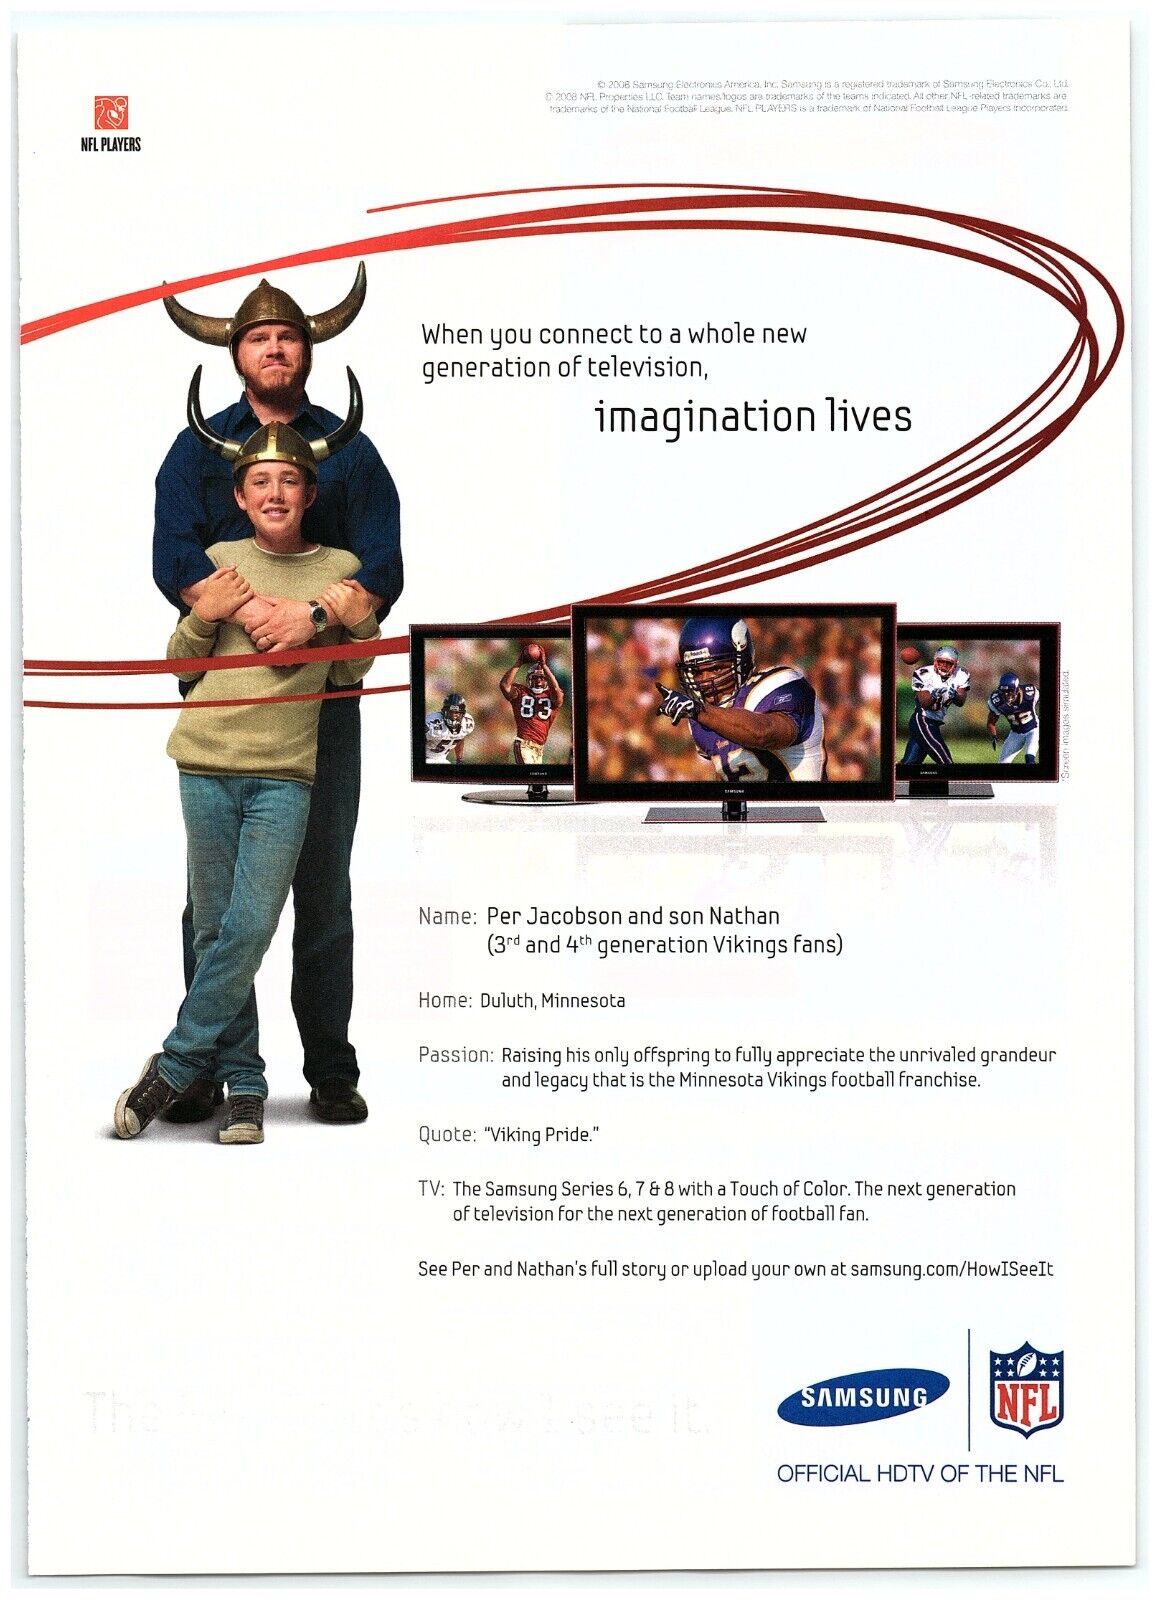 2008 Samsung TV Print Ad, NFL Vikings Fans Per & Nathan Jacobson Horn Helmets